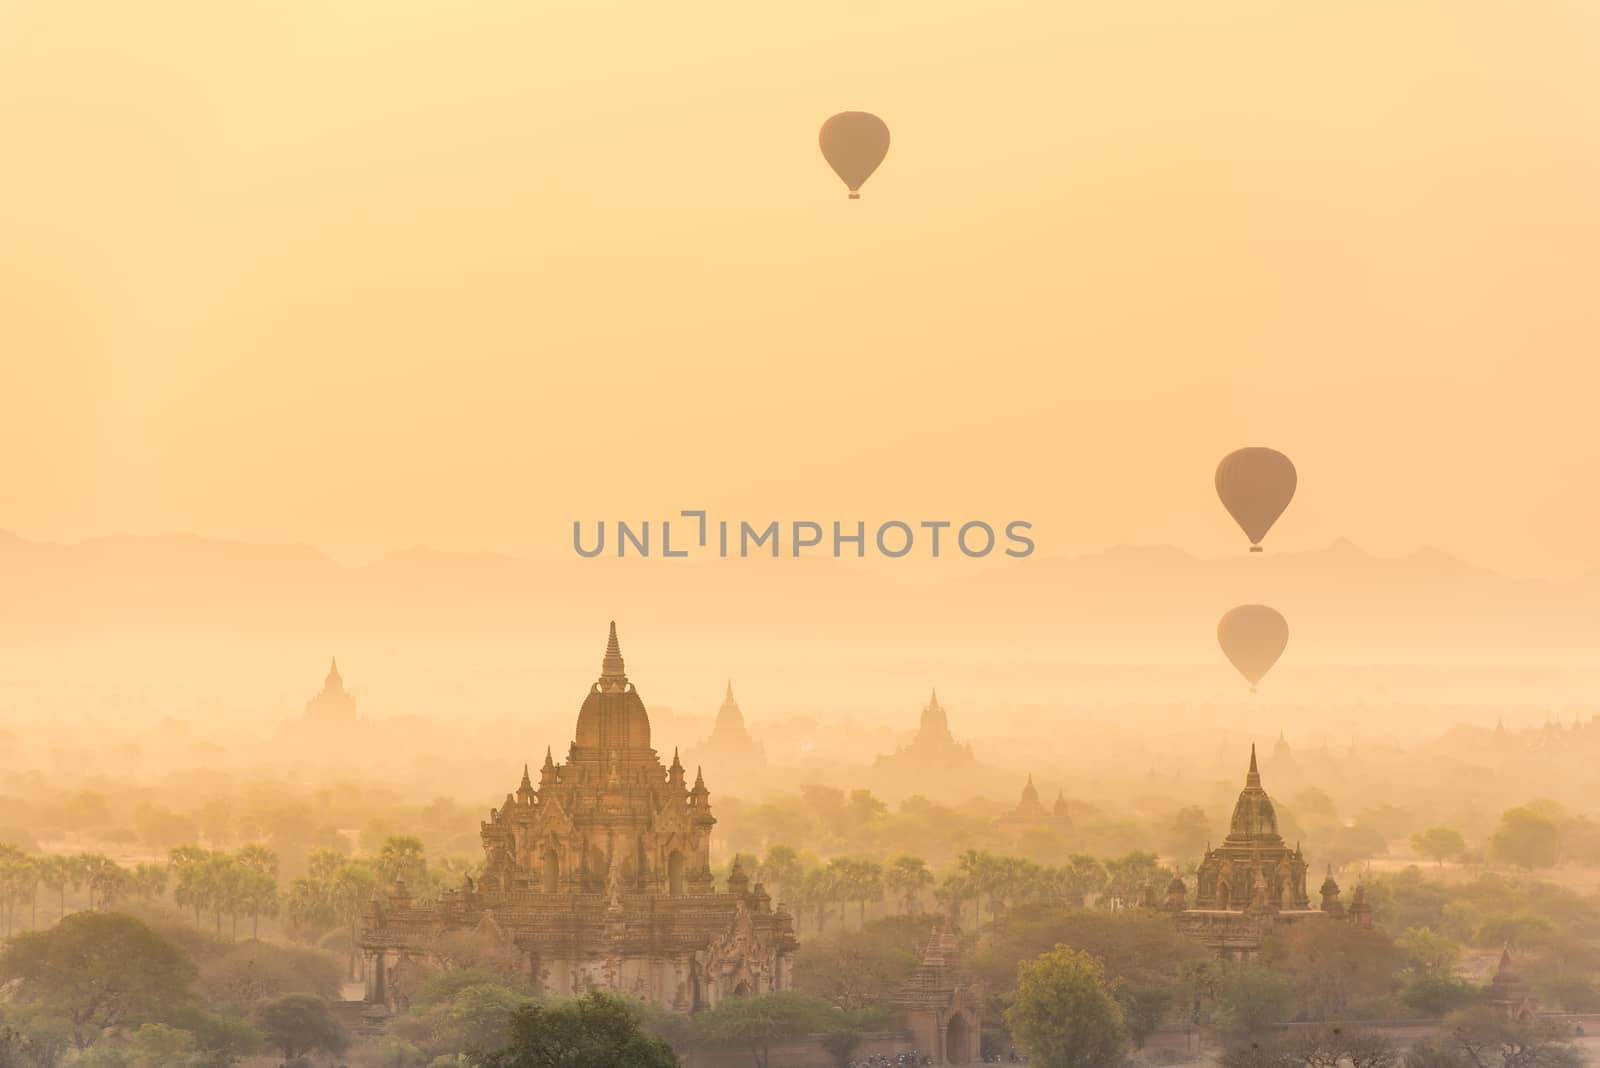 Hot air balloon over plain of Bagan in misty morning before sunrise, Myanmar